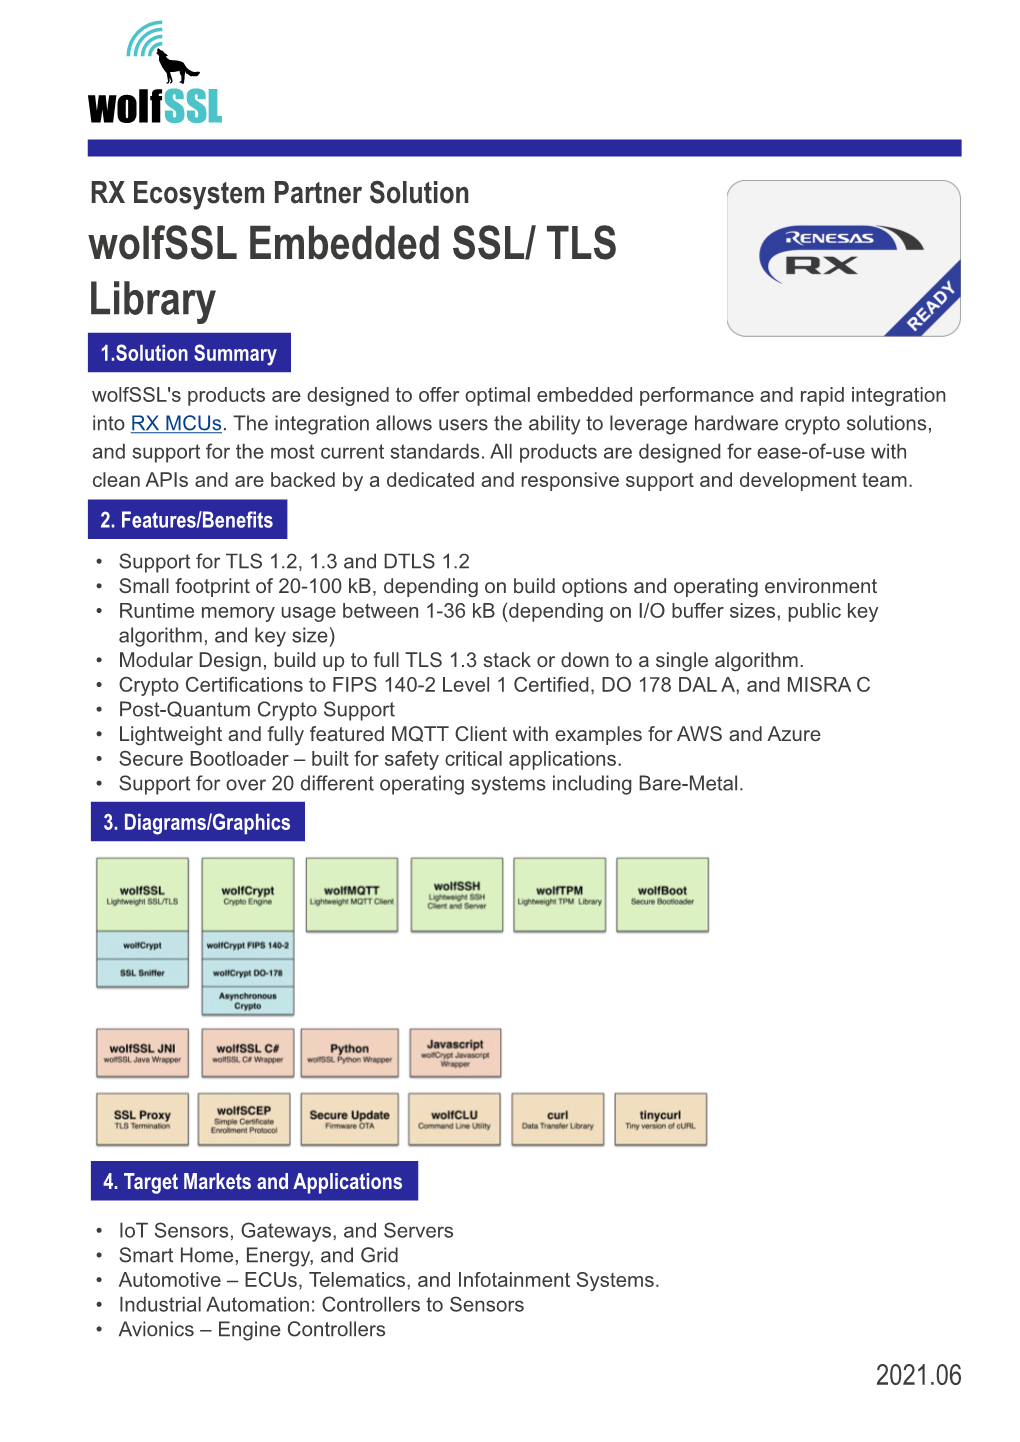 Wolfssl Embedded SSL/ TLS for RX Library Solution Brief